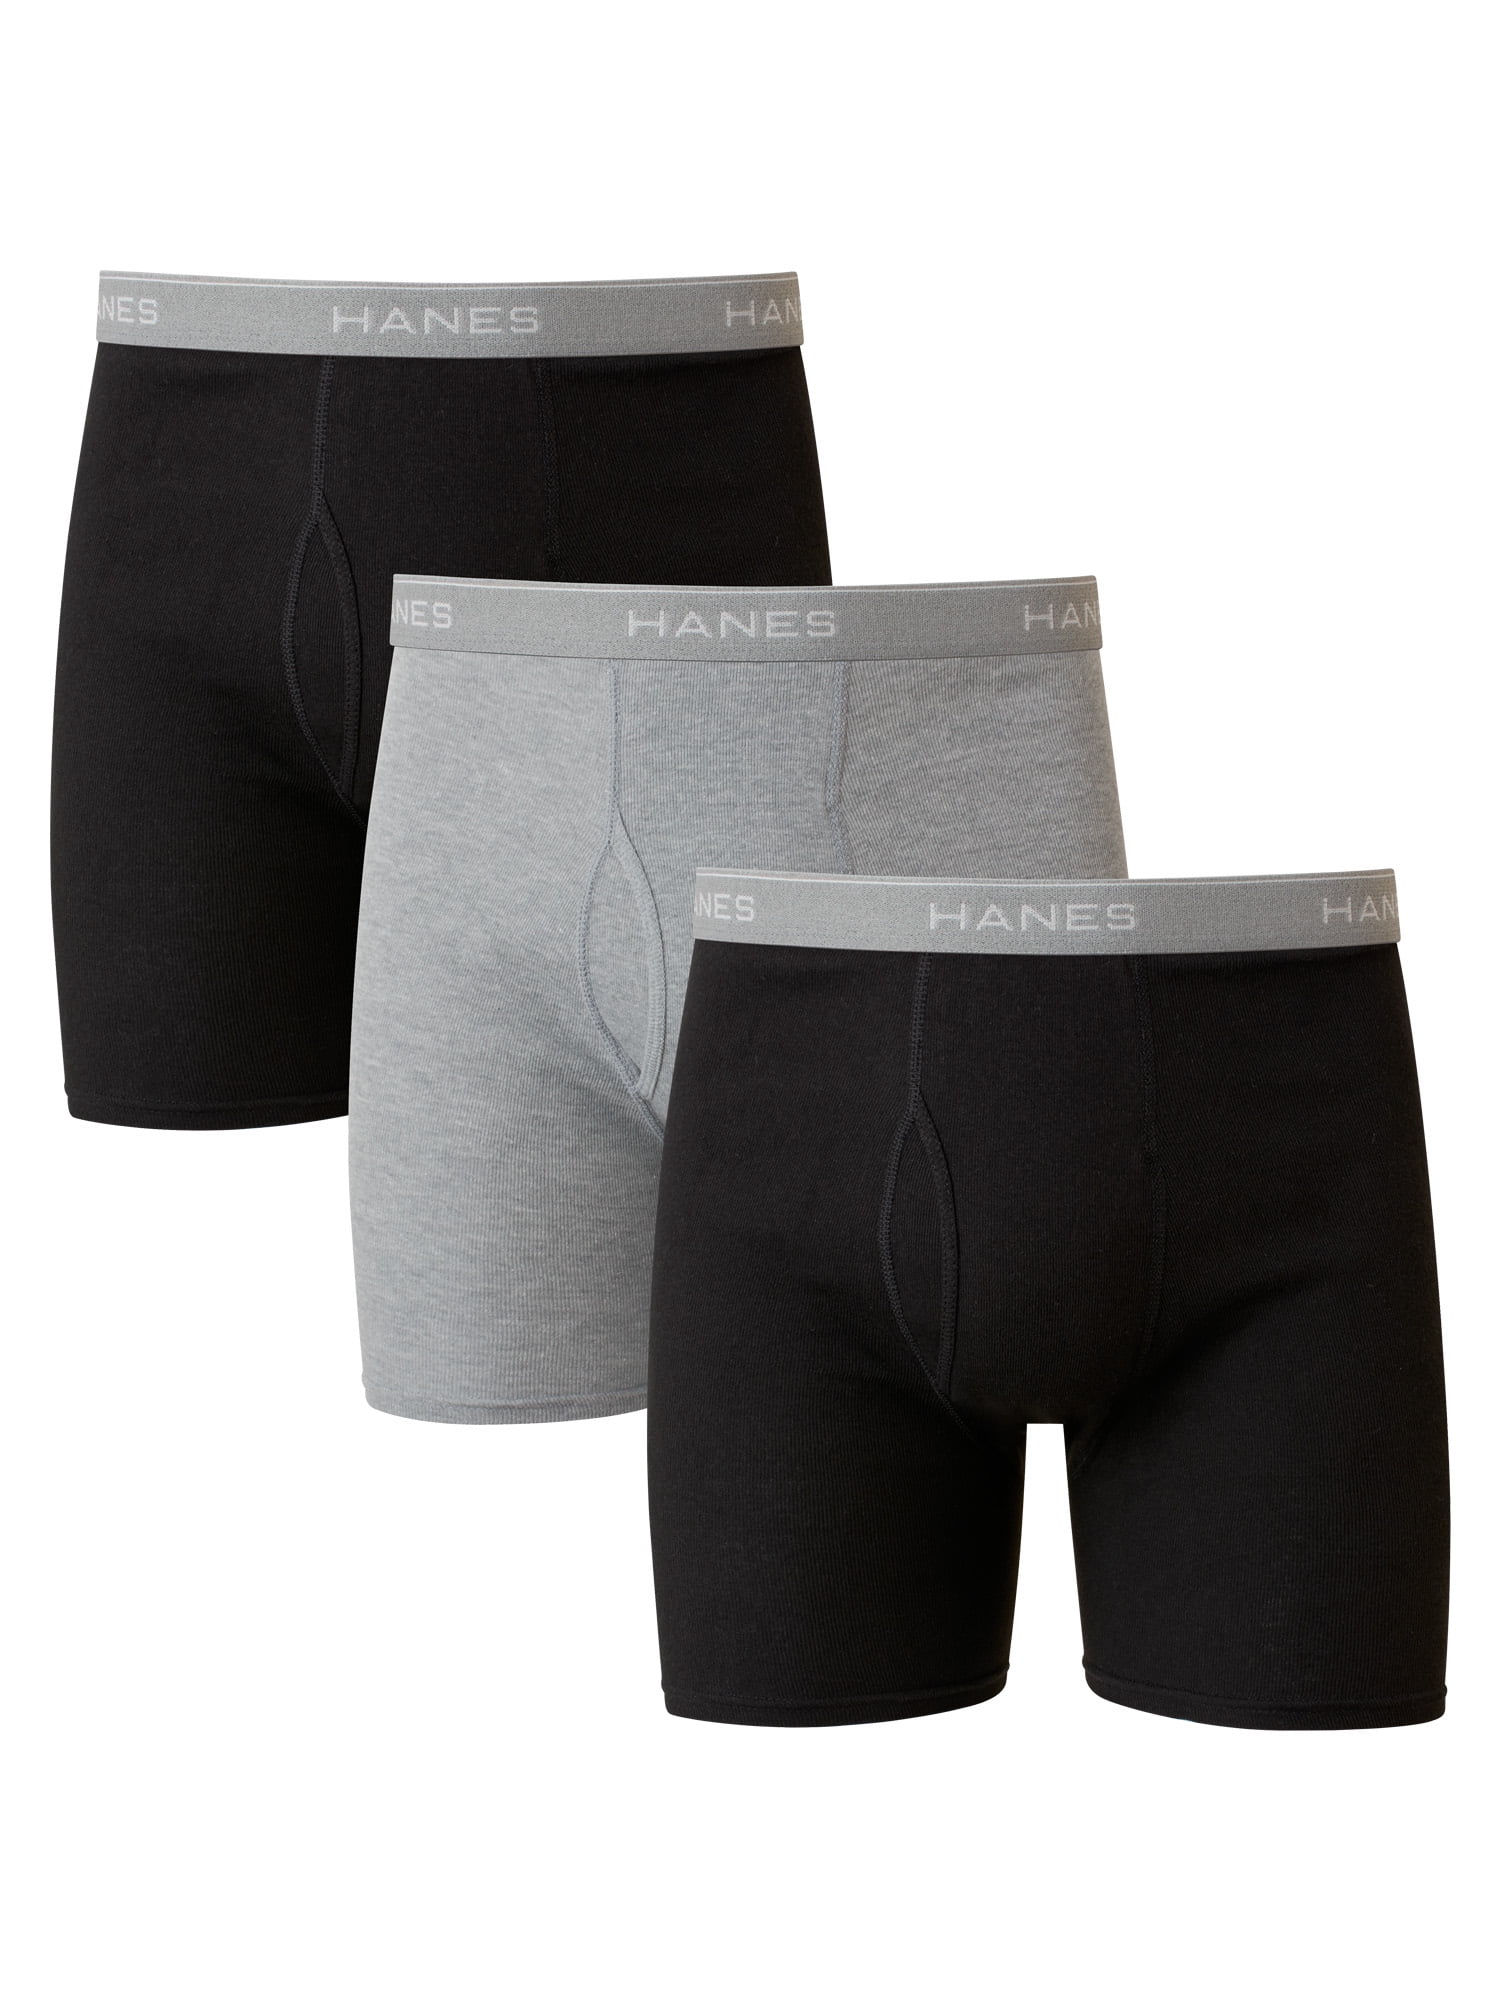 Hanes Men's Black/Grey Boxer Briefs, 3 Pack - Walmart.com